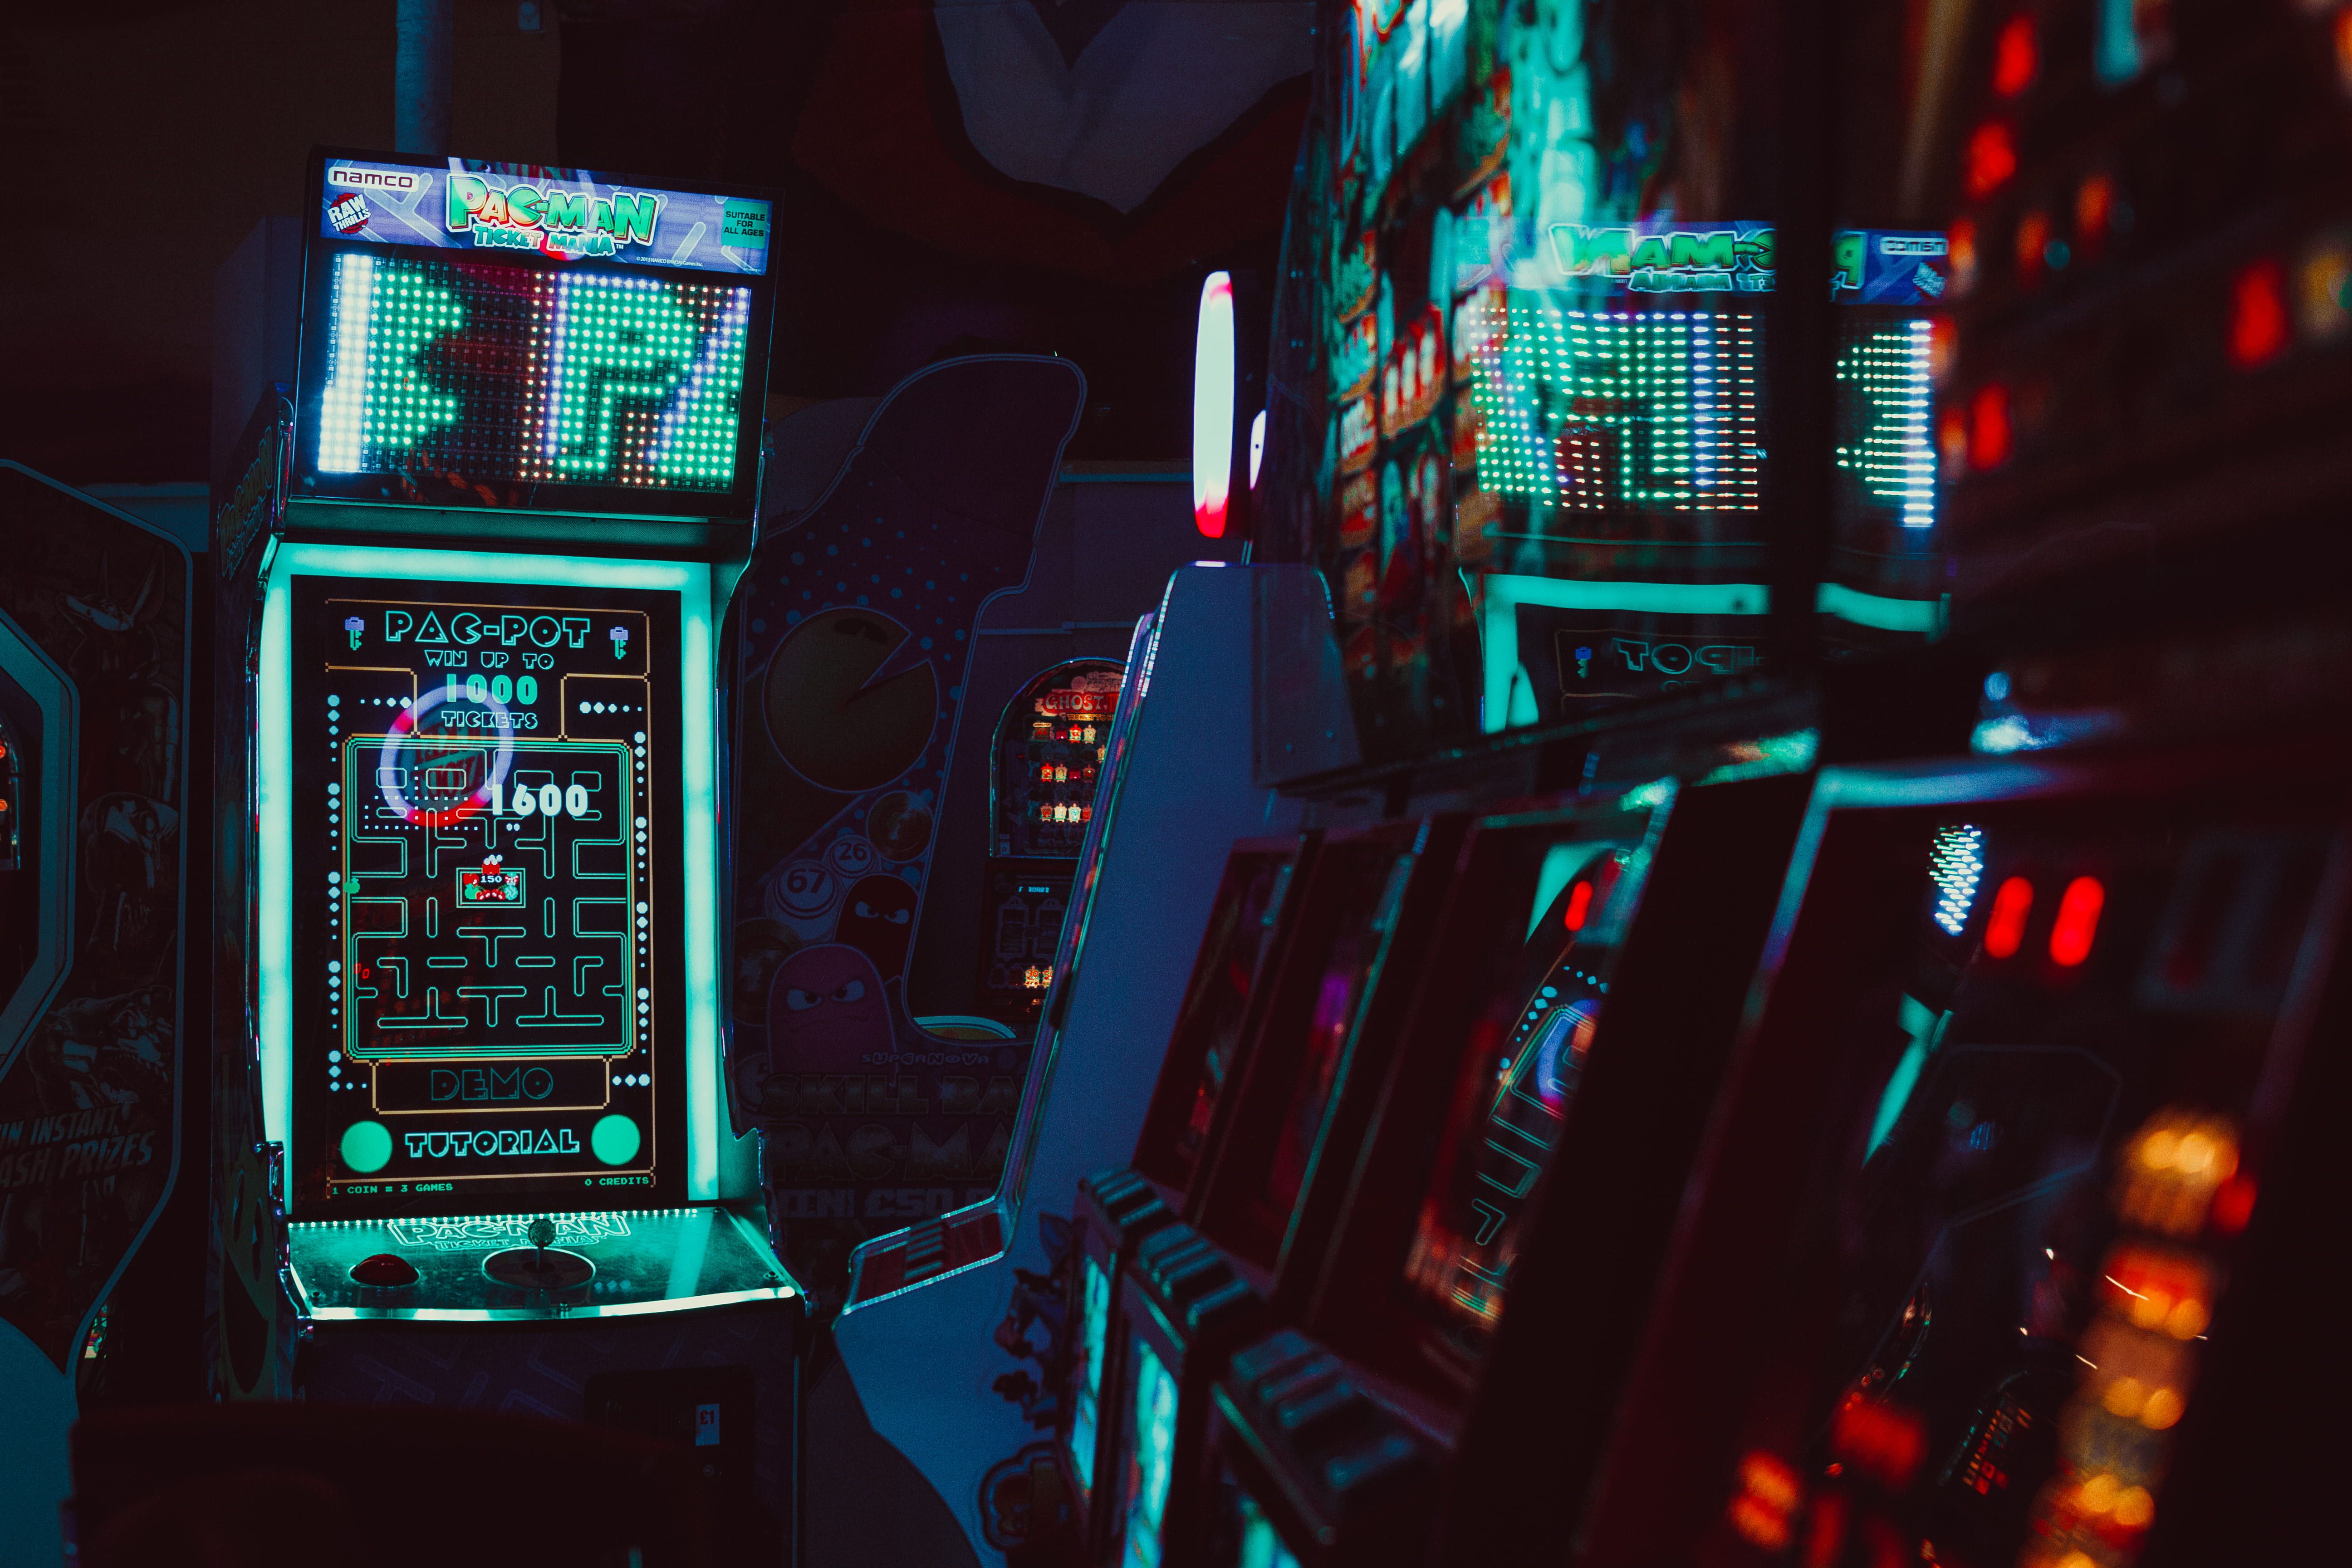 Lumen P teal and black Pacman arcade machine #arcade #game #pacman #retro #neon K #wallpaper #hdwallpaper #desk. Arcade, Retro wallpaper, 4k wallpaper for pc